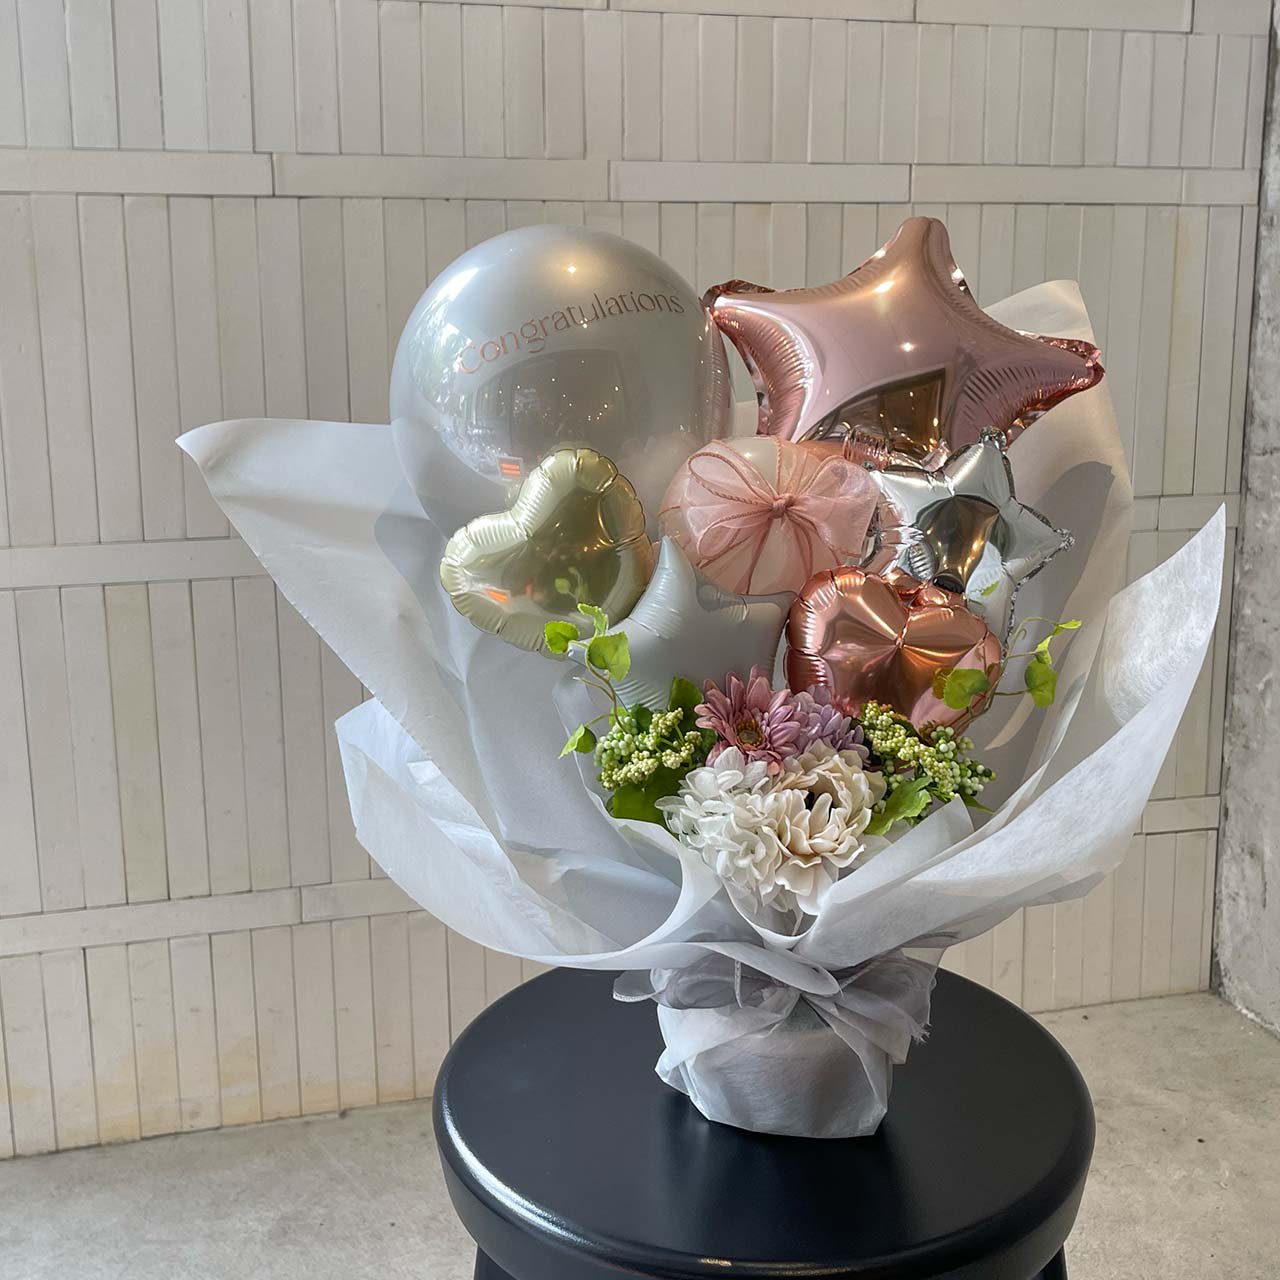 Fascinate Balloon Gift Table Top Type ファッシネイトバルーンギフト チャビーバルーン 大阪 名古屋 滋賀にあるおしゃれなバルーン電報 バルーン装飾 バルーンギフトのことならチャビーバルーン